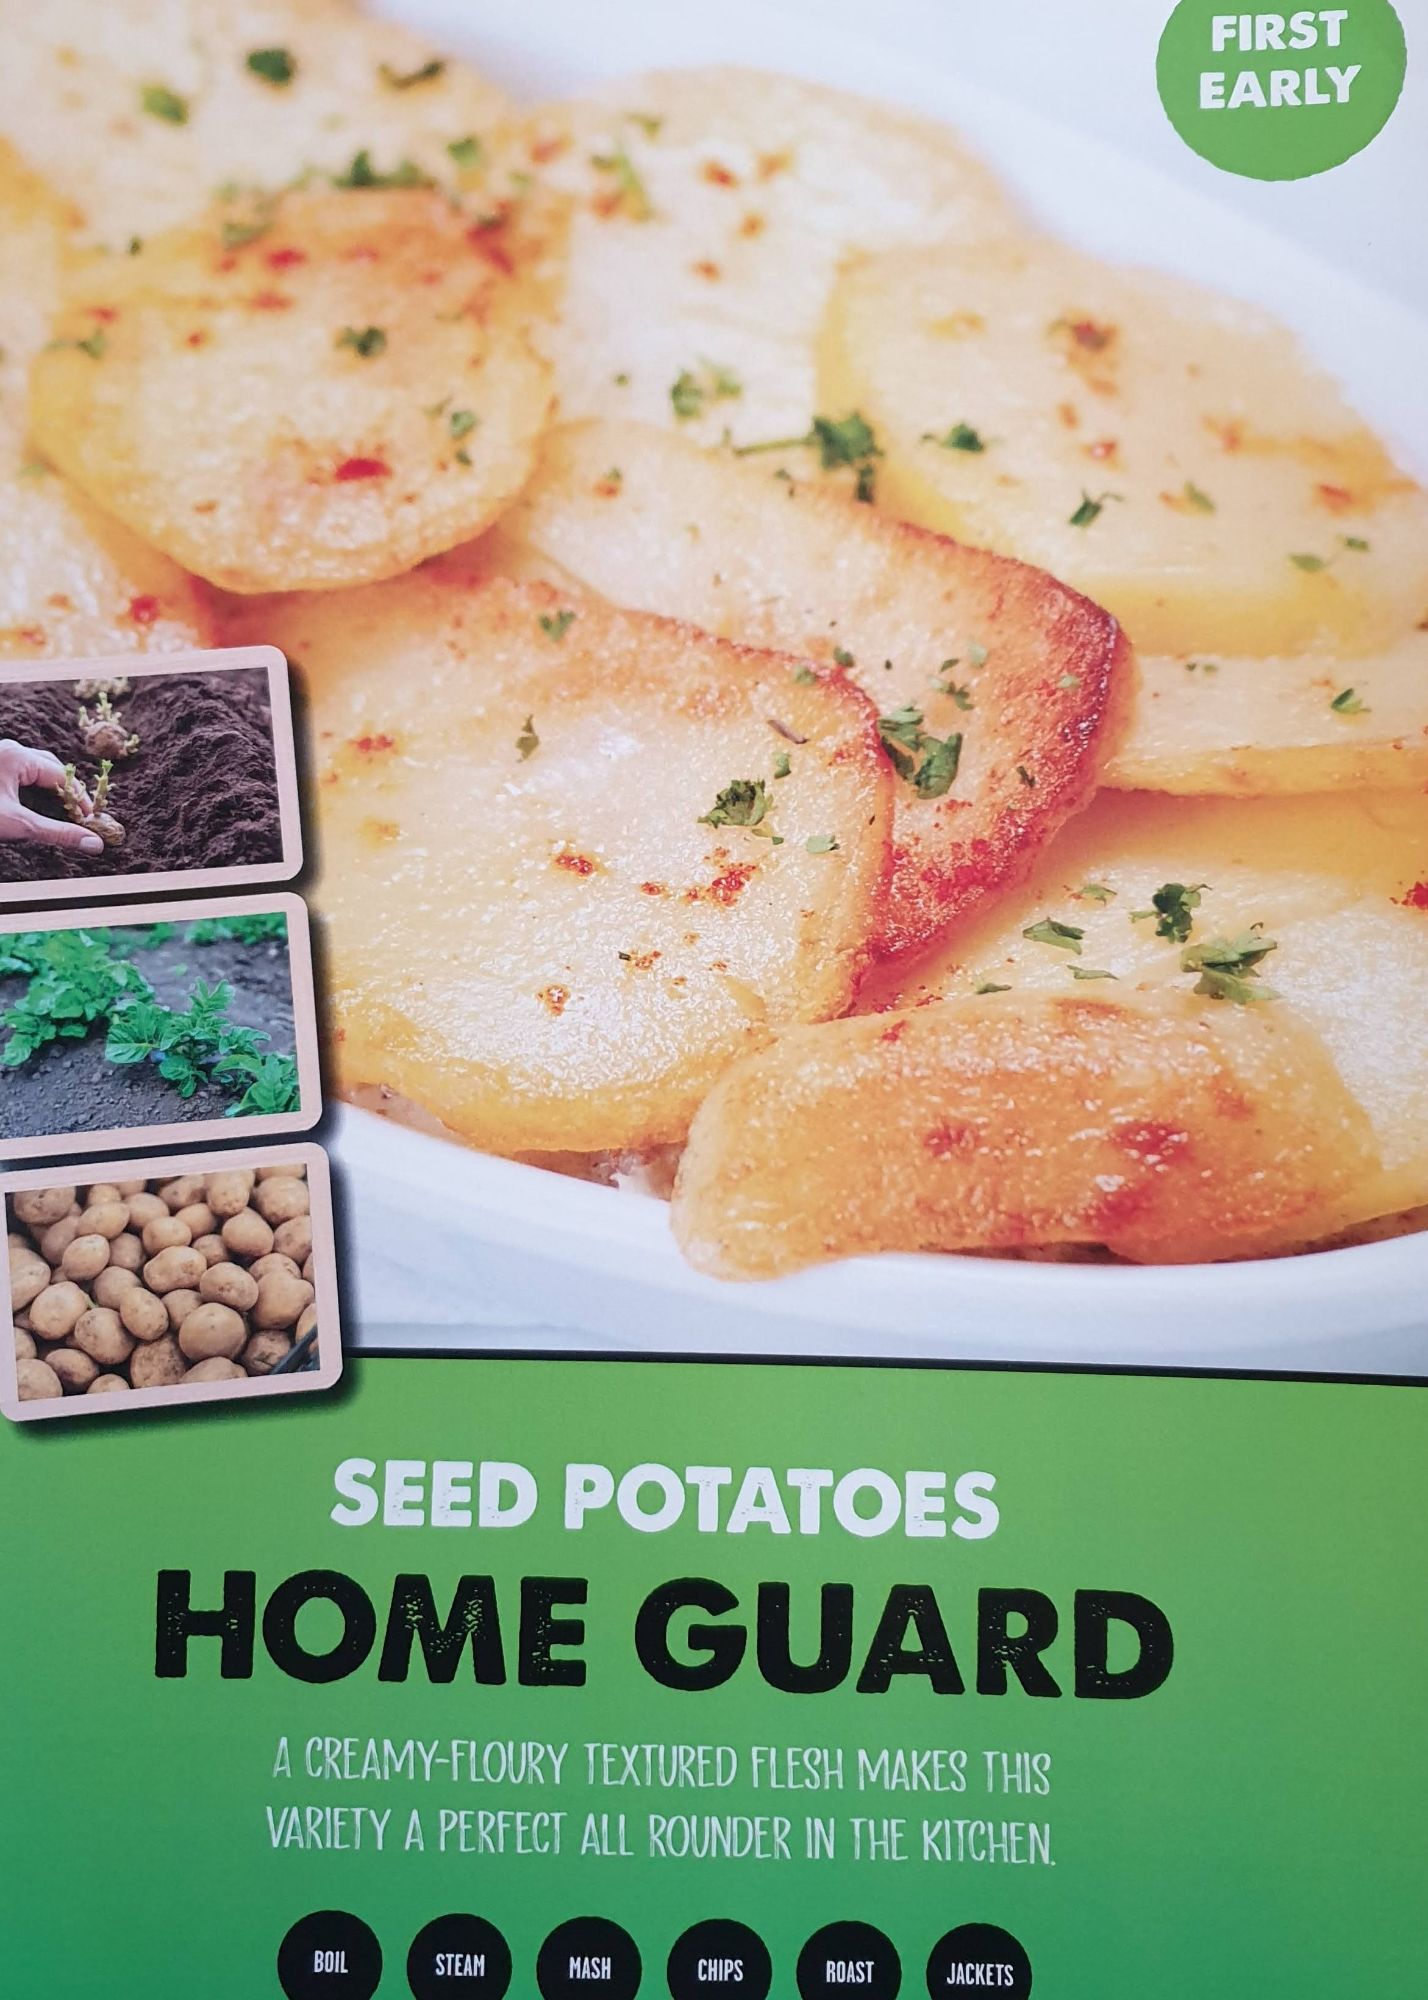 home_gueard_seed_potato_info.jpg